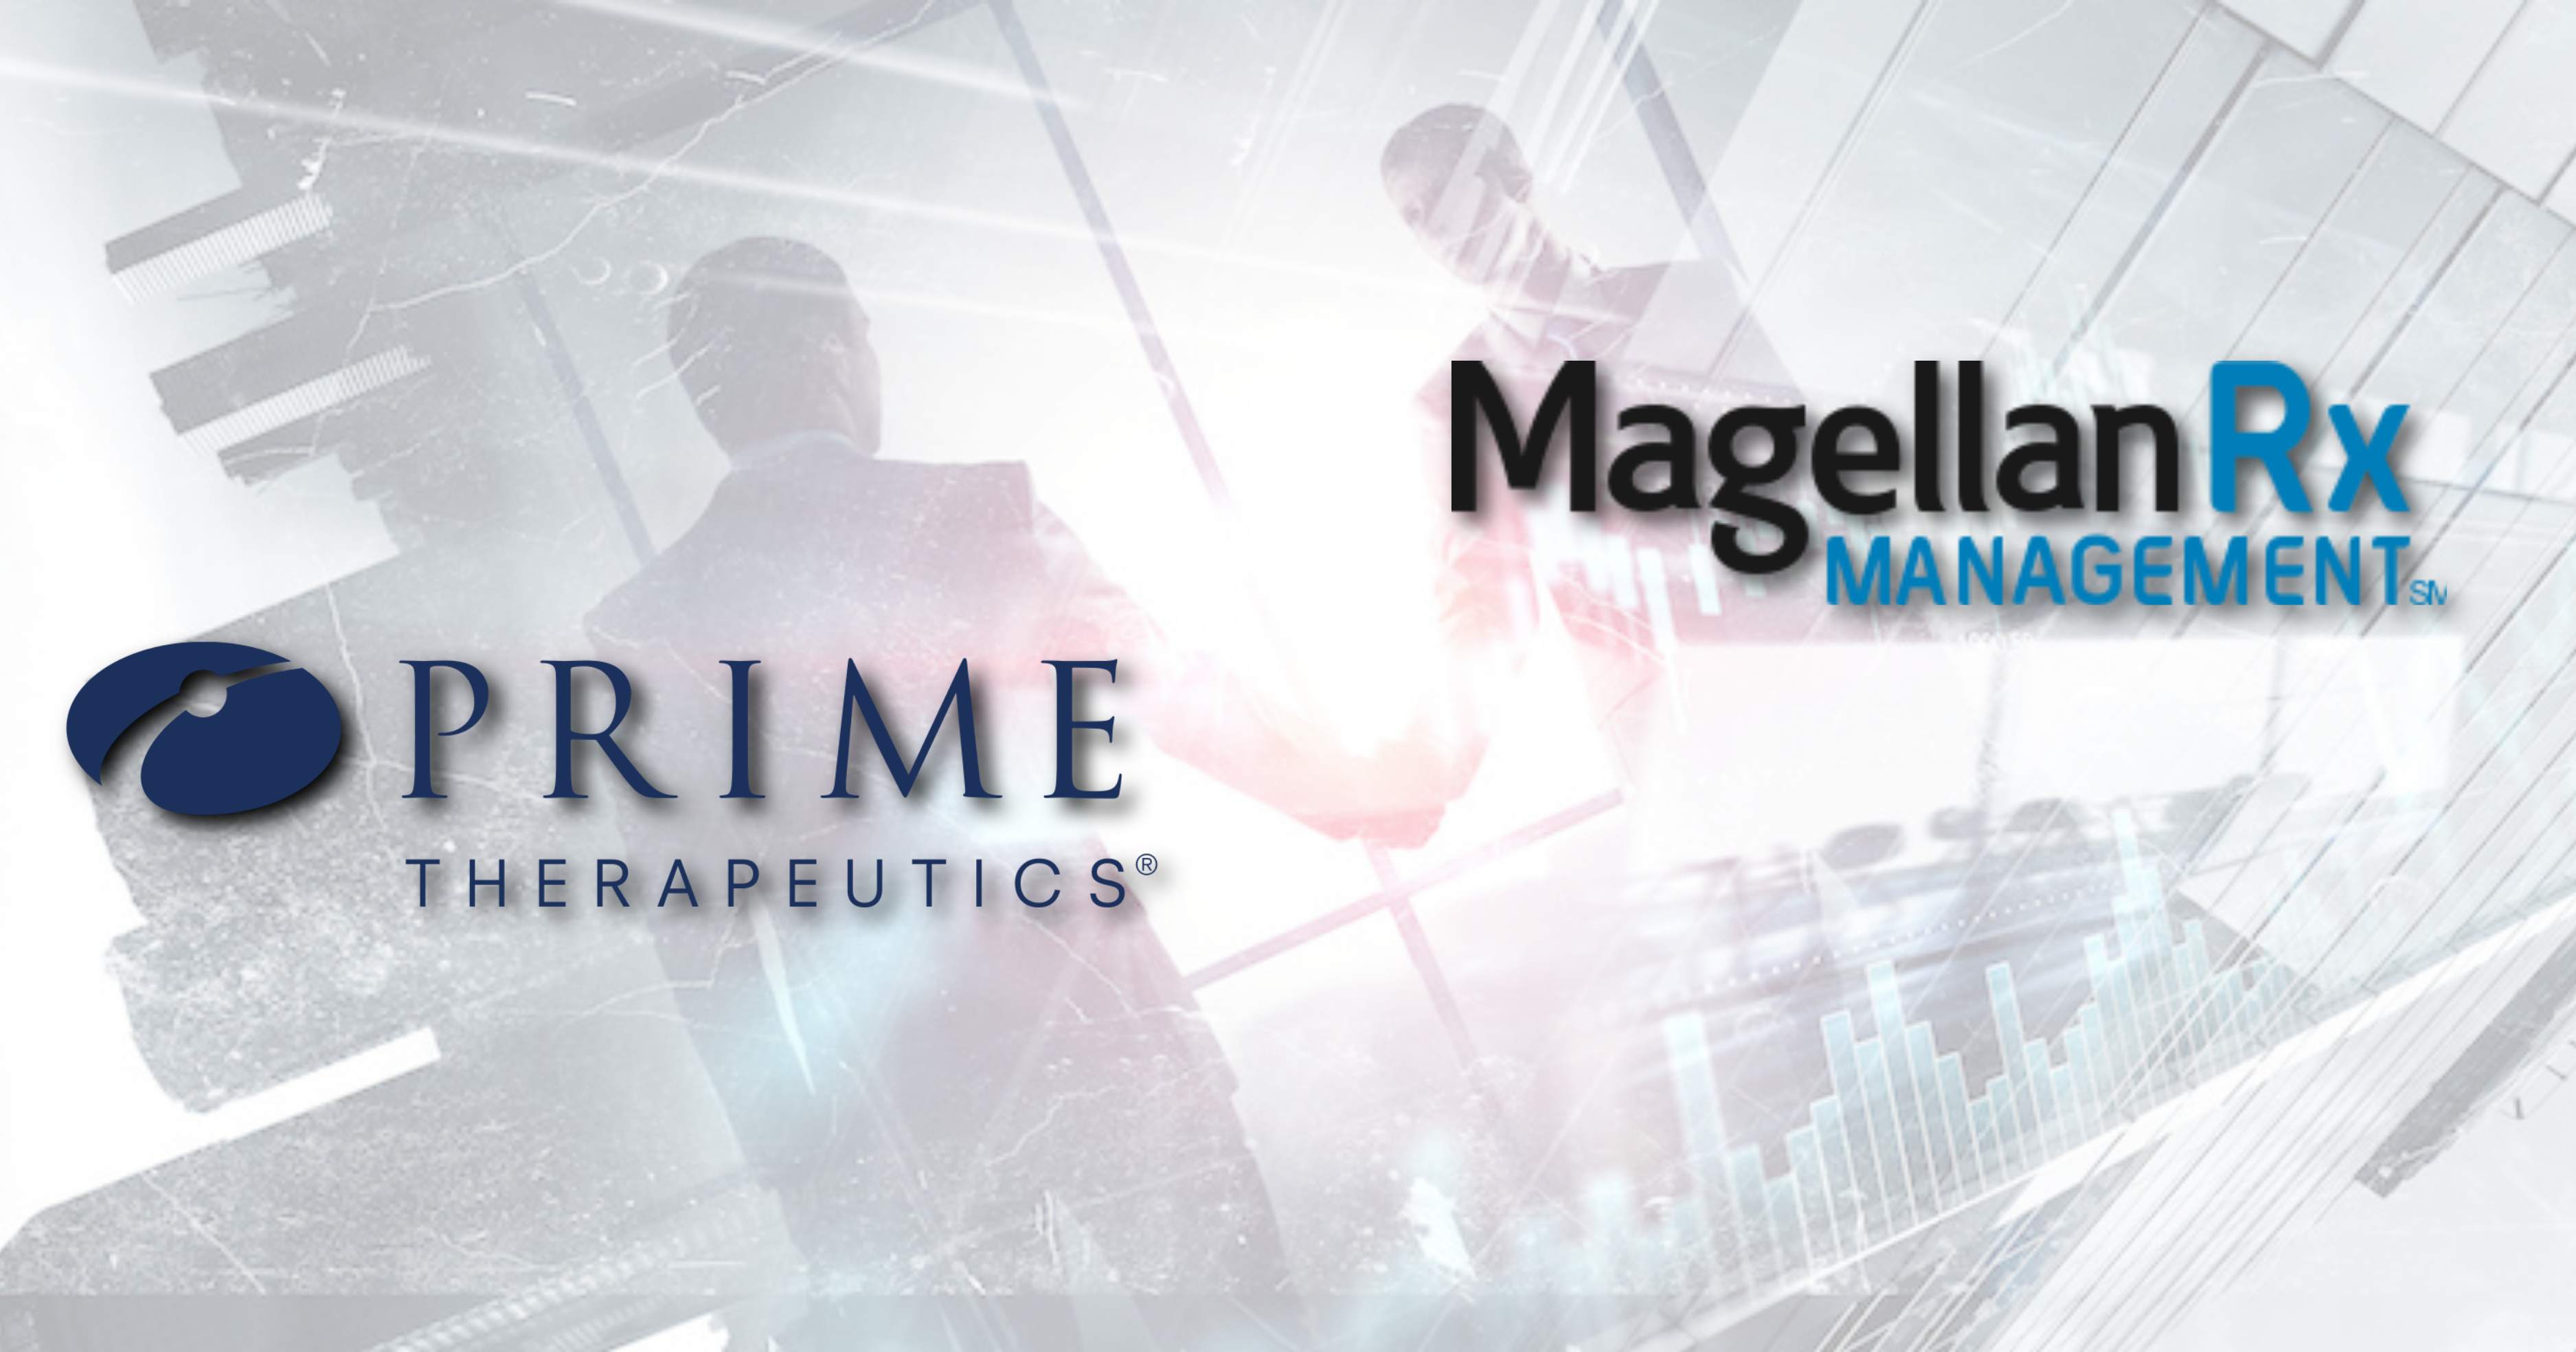 men shaking hands, Magellan Rx management logo, Prime Therapeutics logo